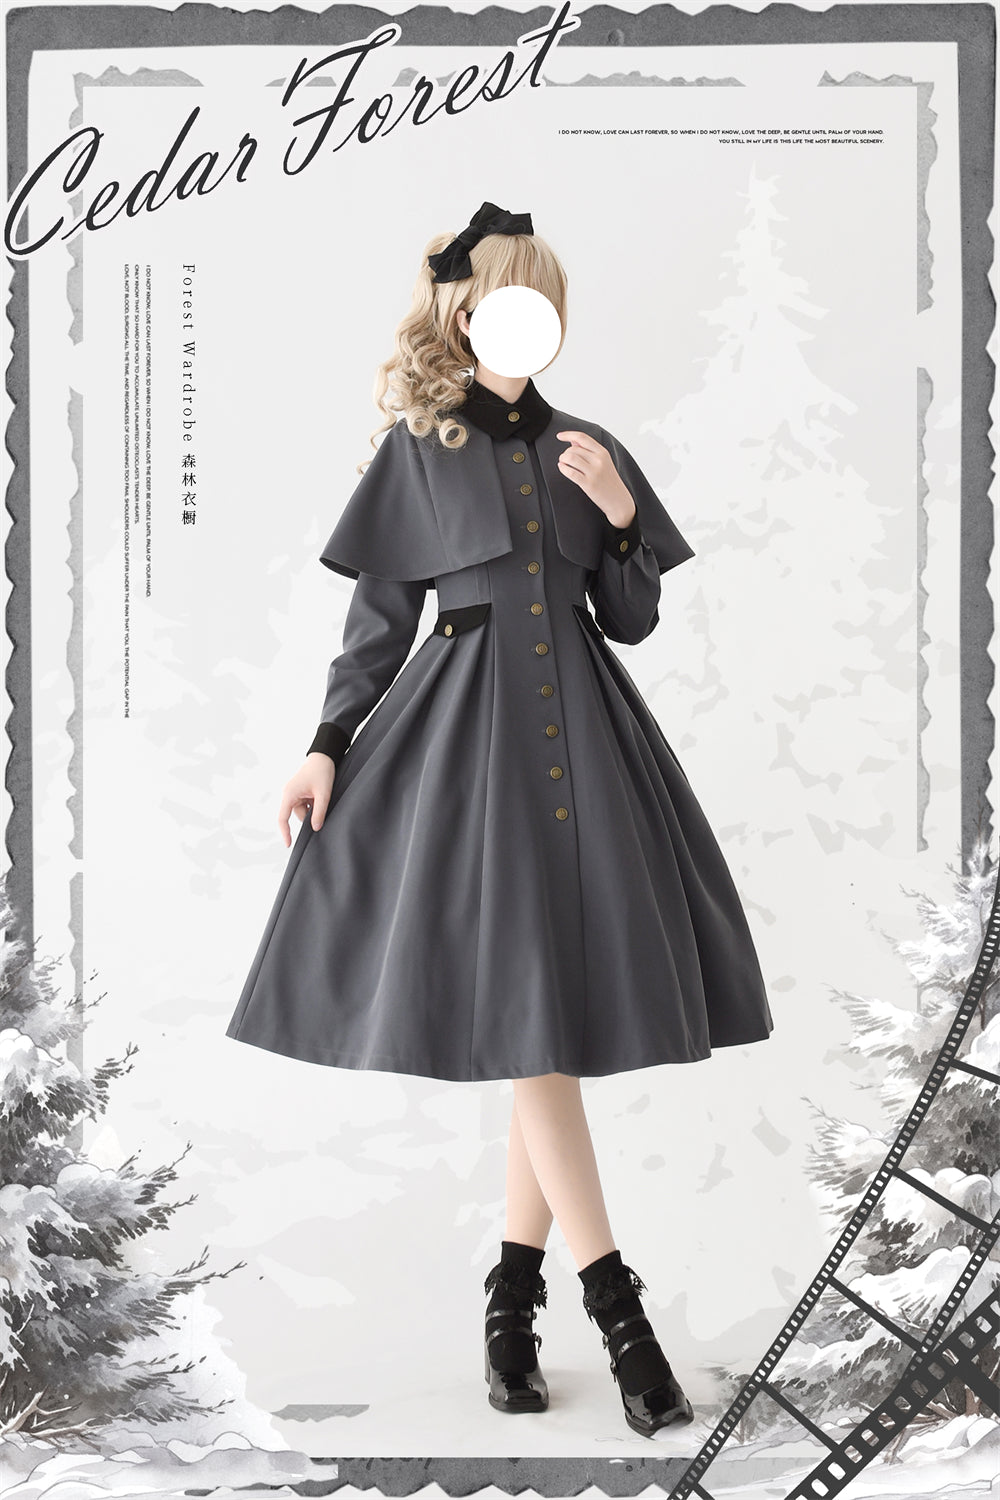 Snow Cedar One-piece coat with classical cape